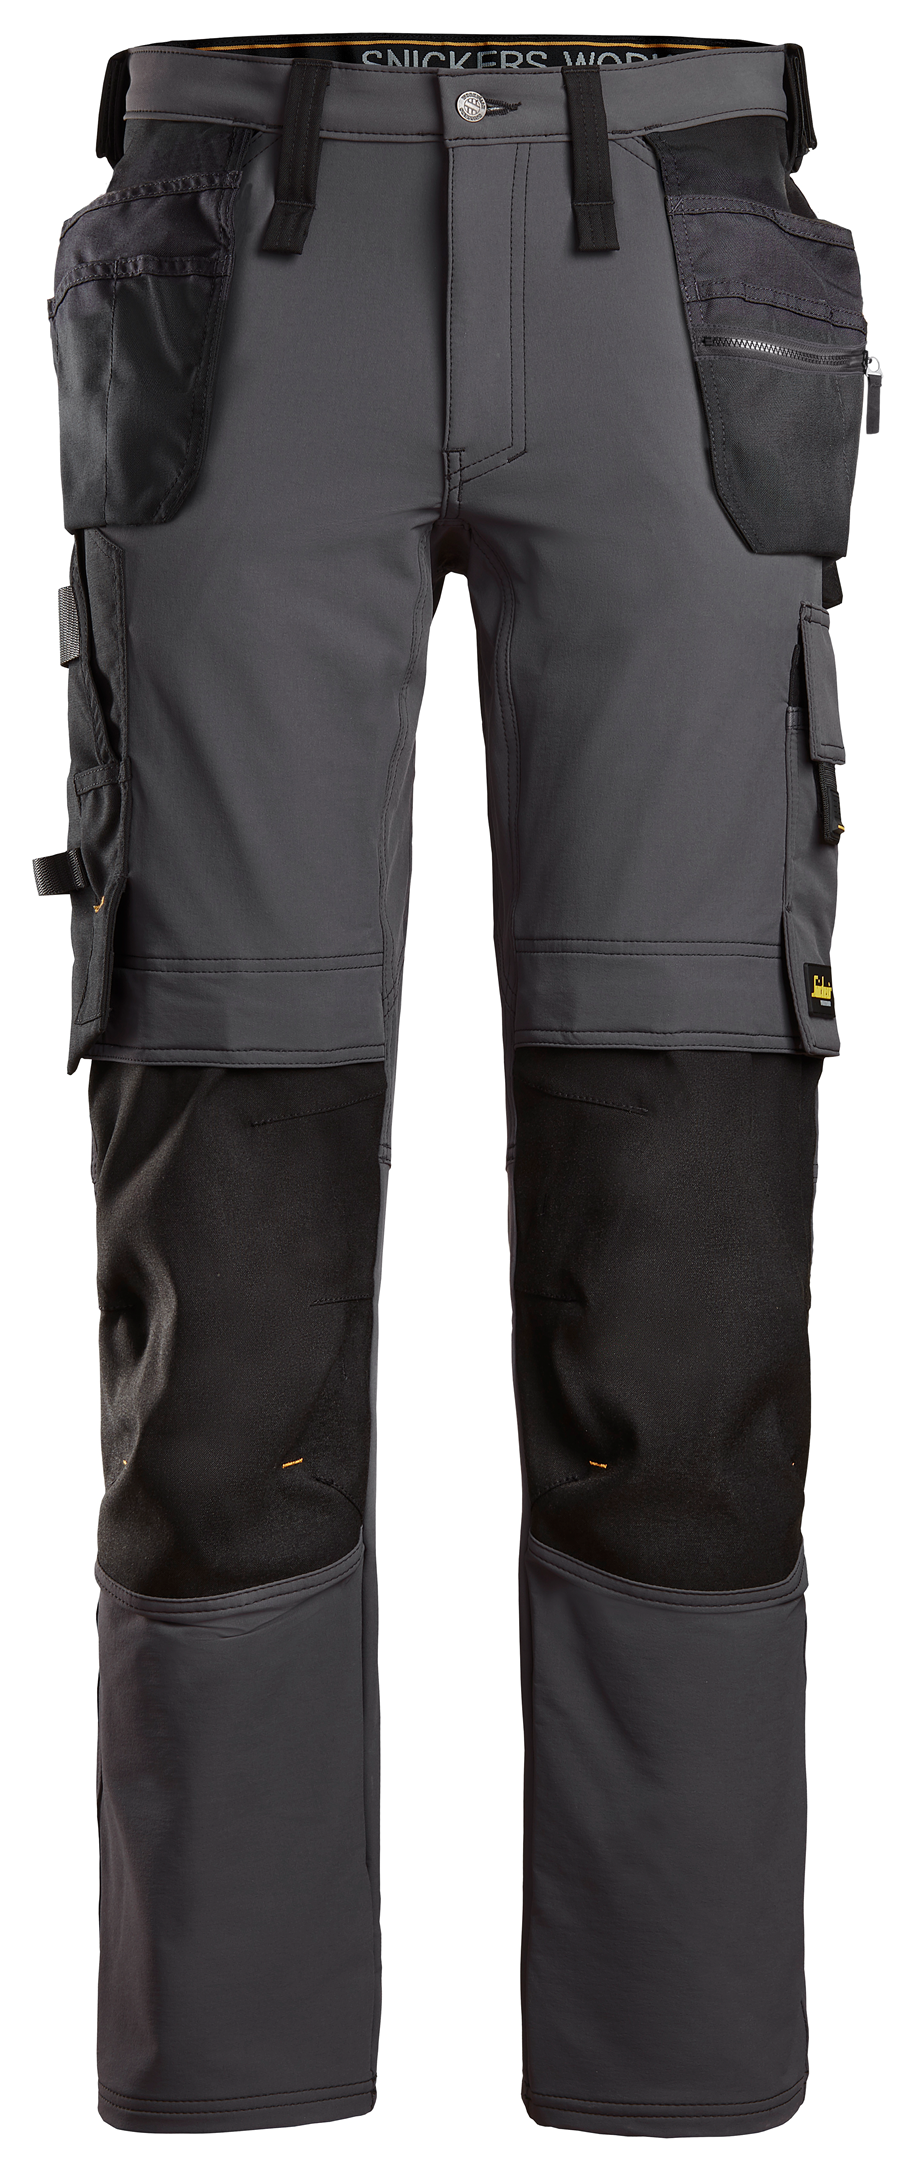 6271 AllroundWork, Pantalon en tissu extensible avec poches holster